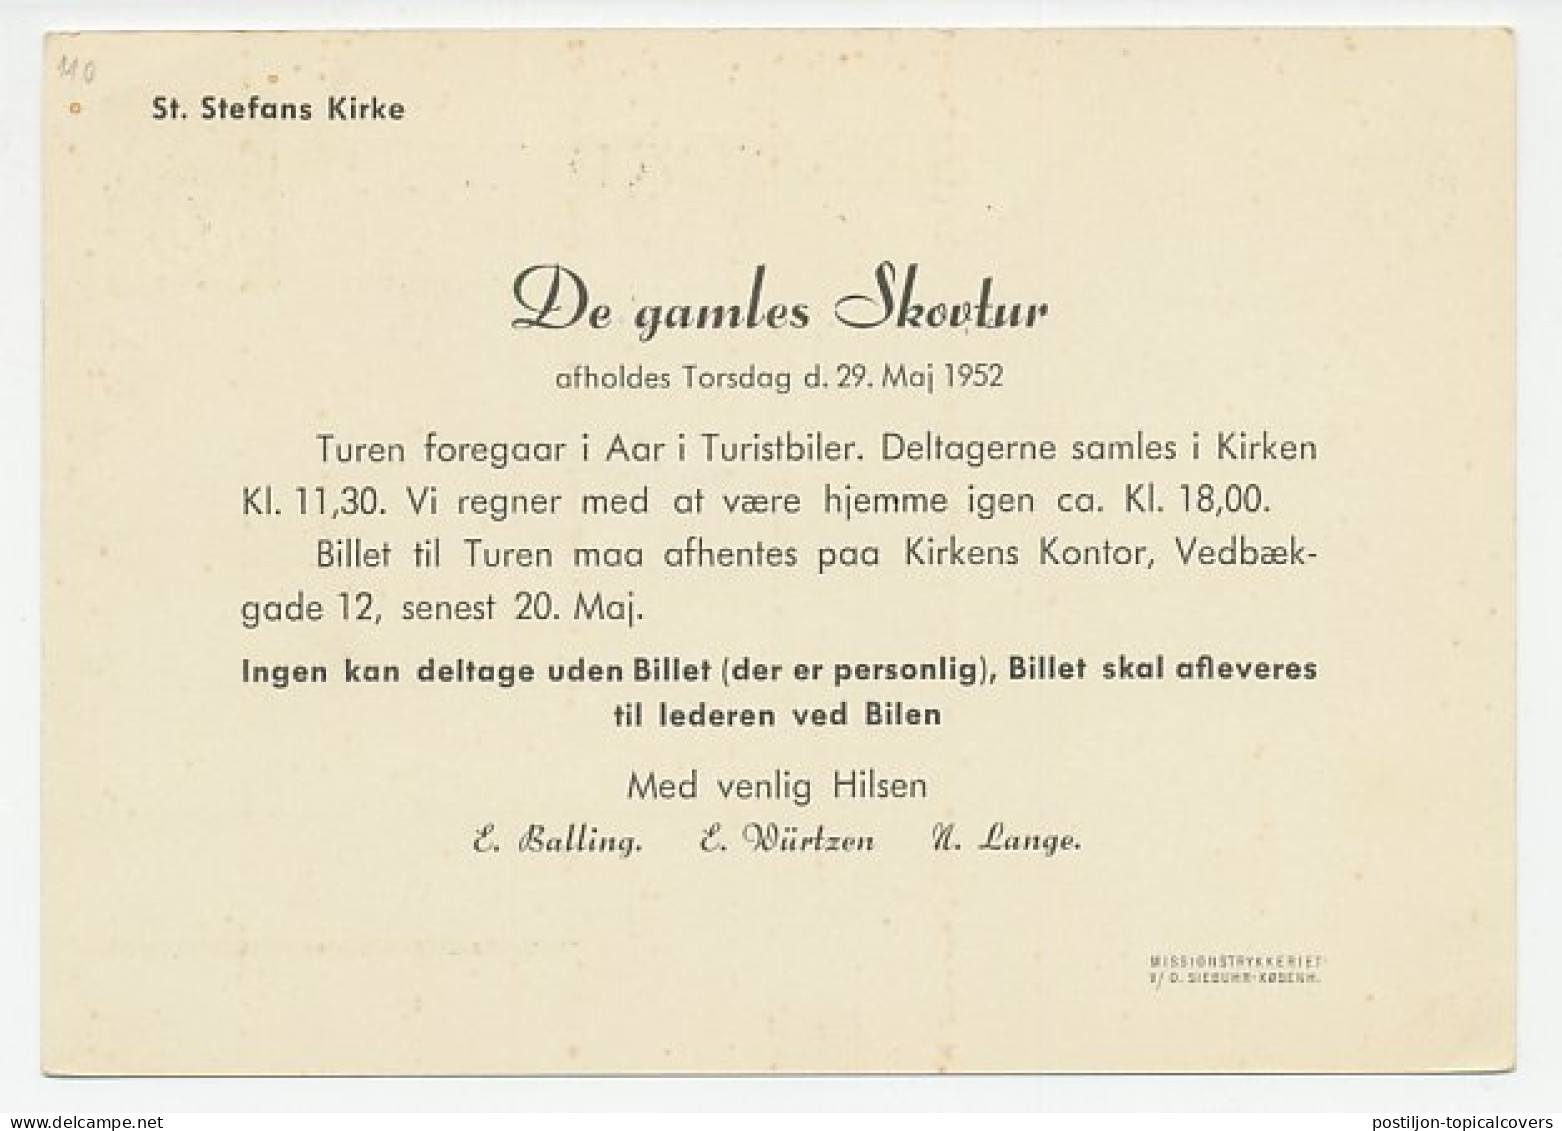 Postcard / Postmark Danmark 1952 Livestock Congress - Fattoria